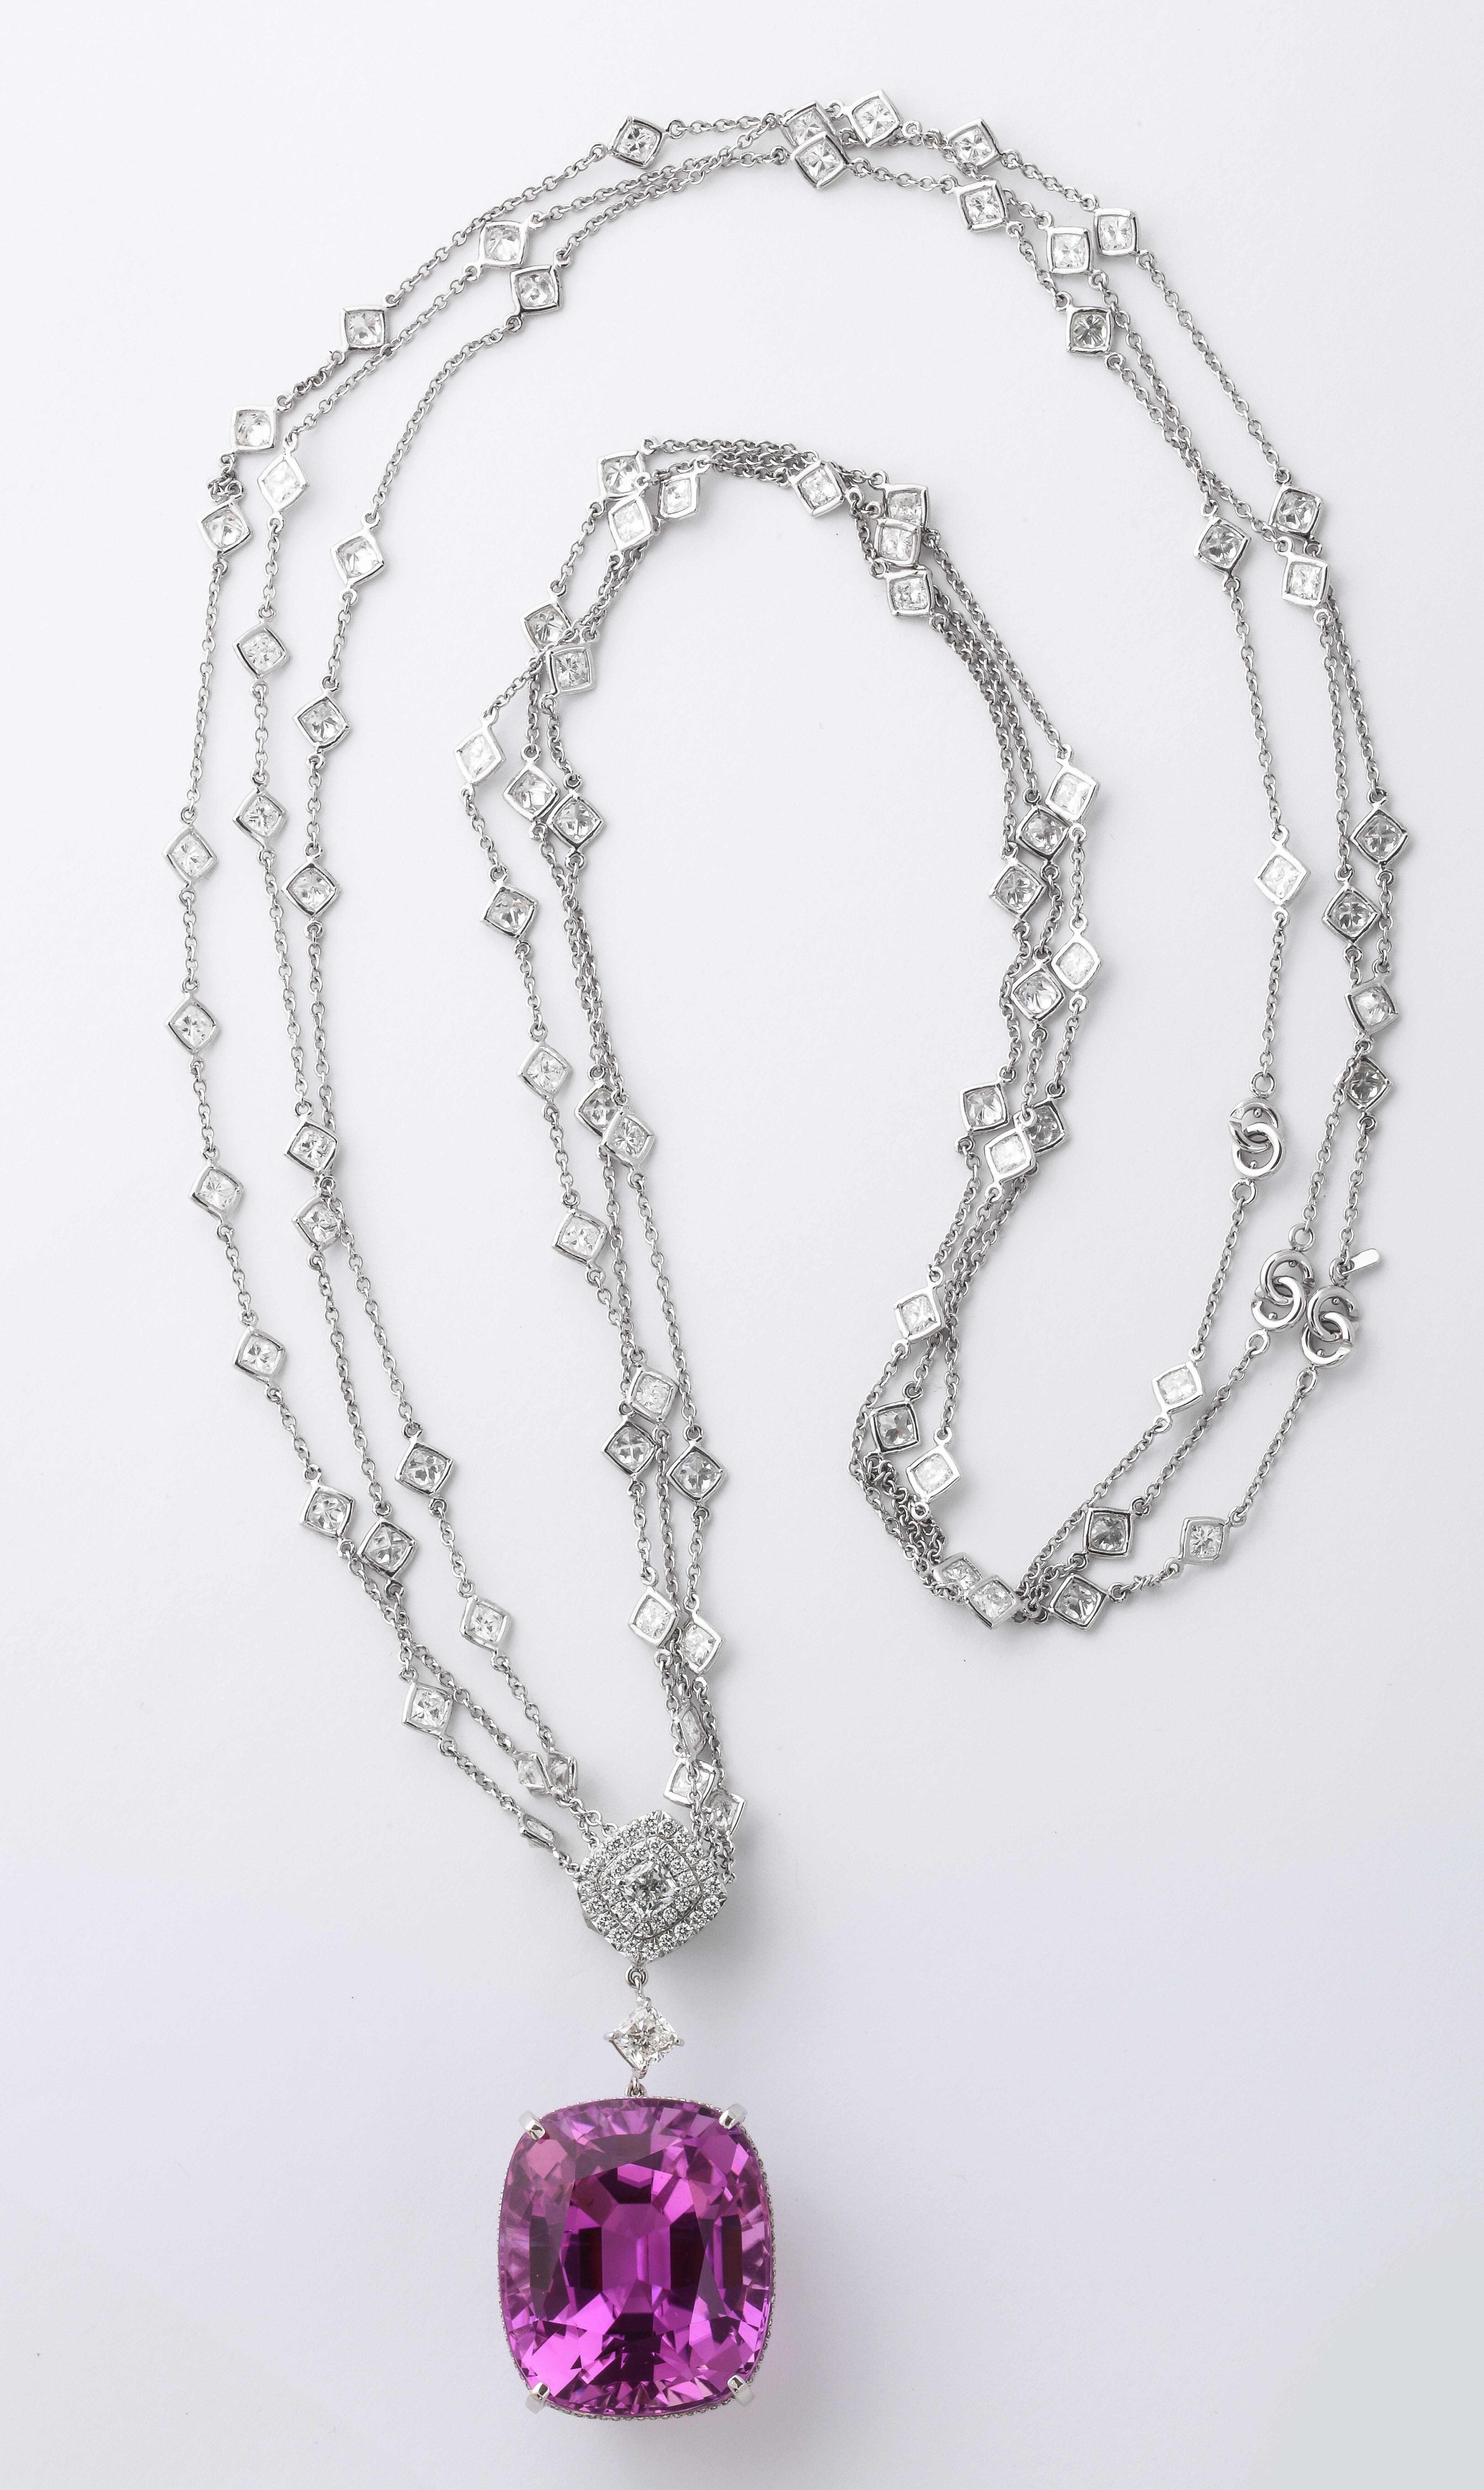 Contemporary Important 100 Carat Kunzite Diamond Necklace